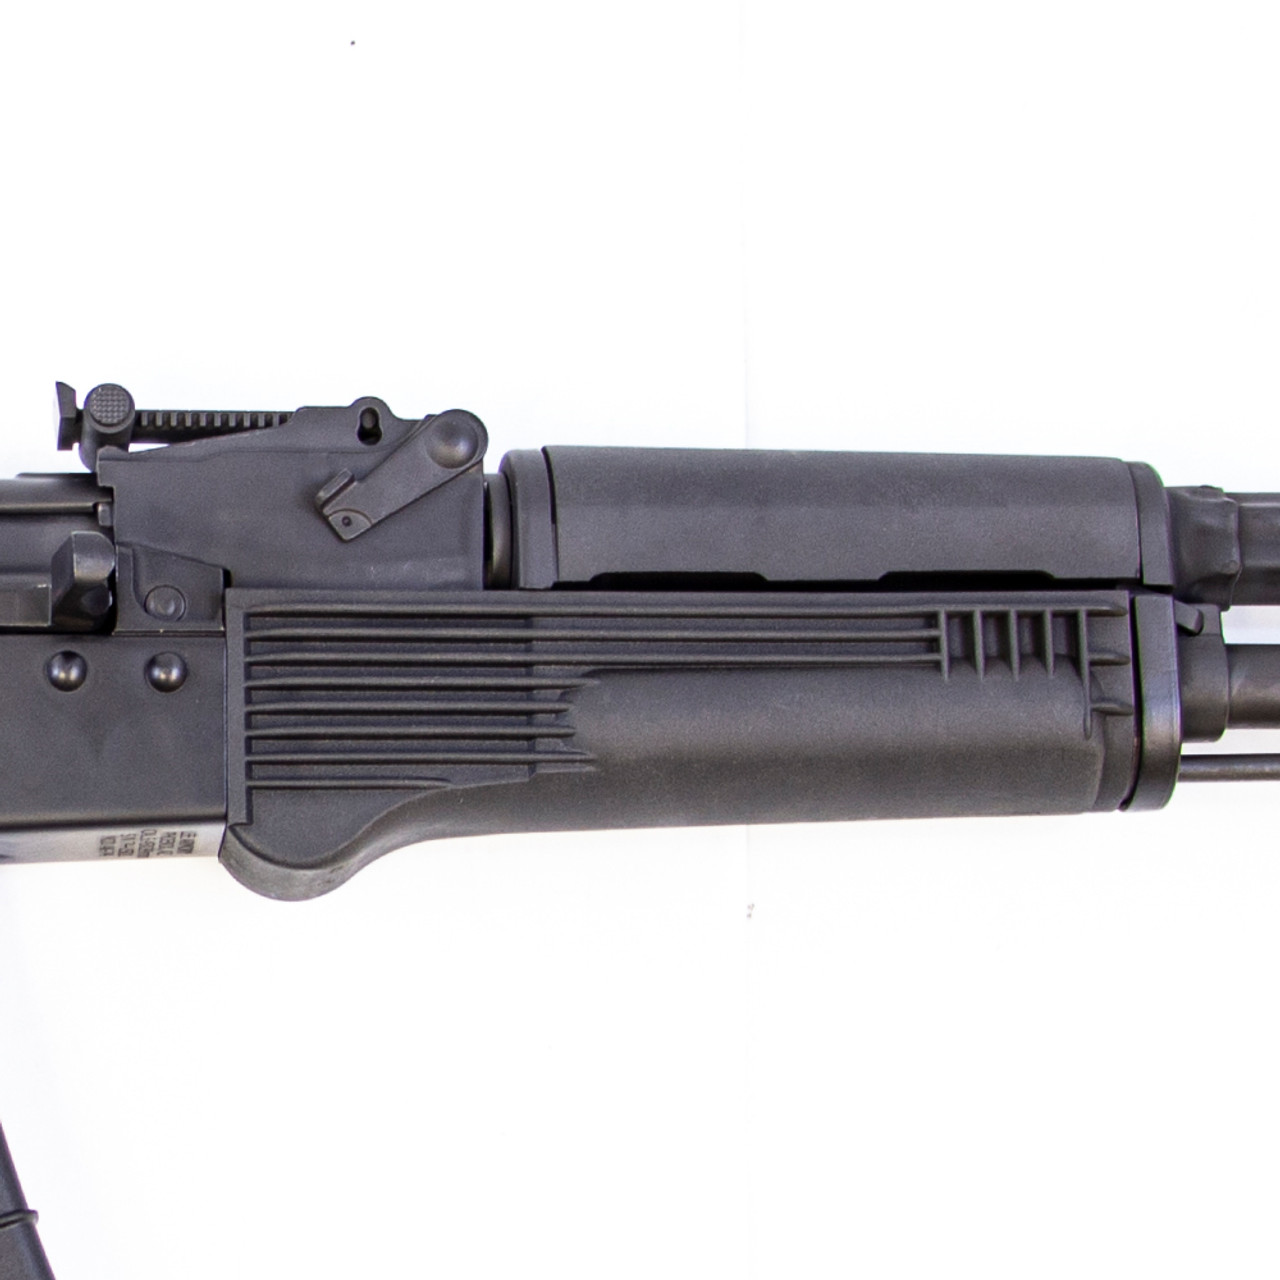 Lee Armory AK-74 CALIFORNIA LEGAL - 5.45x39